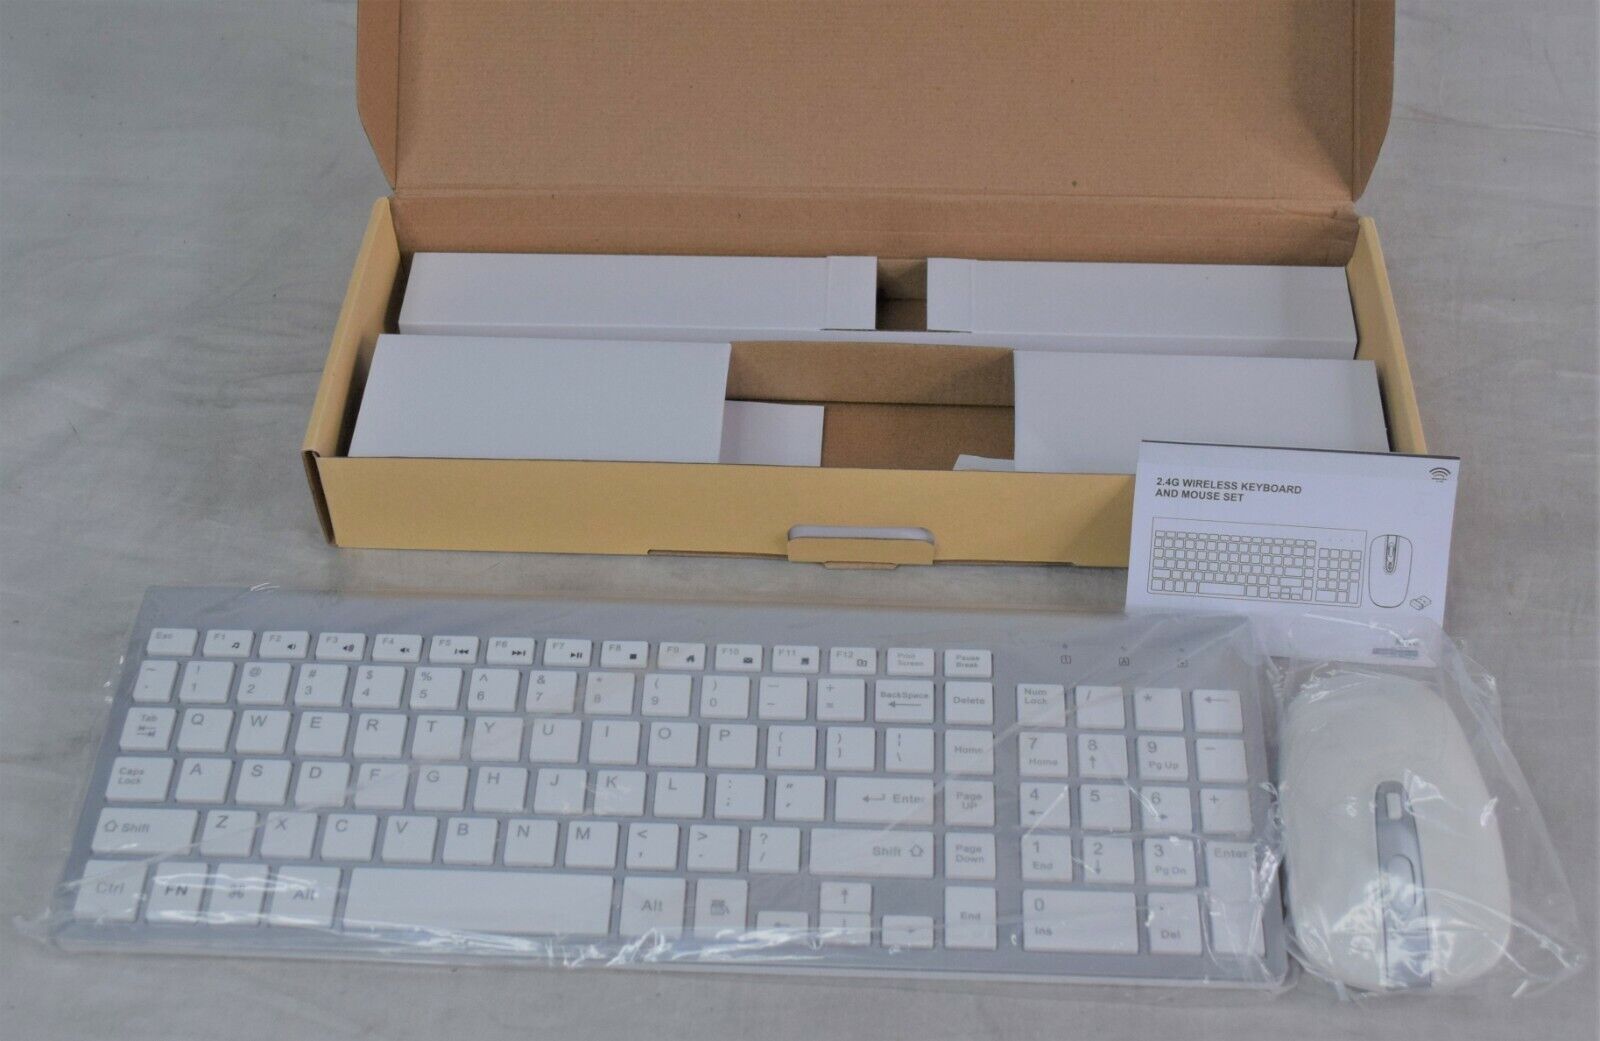 Cimetech KF-10+TM002 Silver/White 2.4 Ghz Wireless Keyboard And Mouse Set